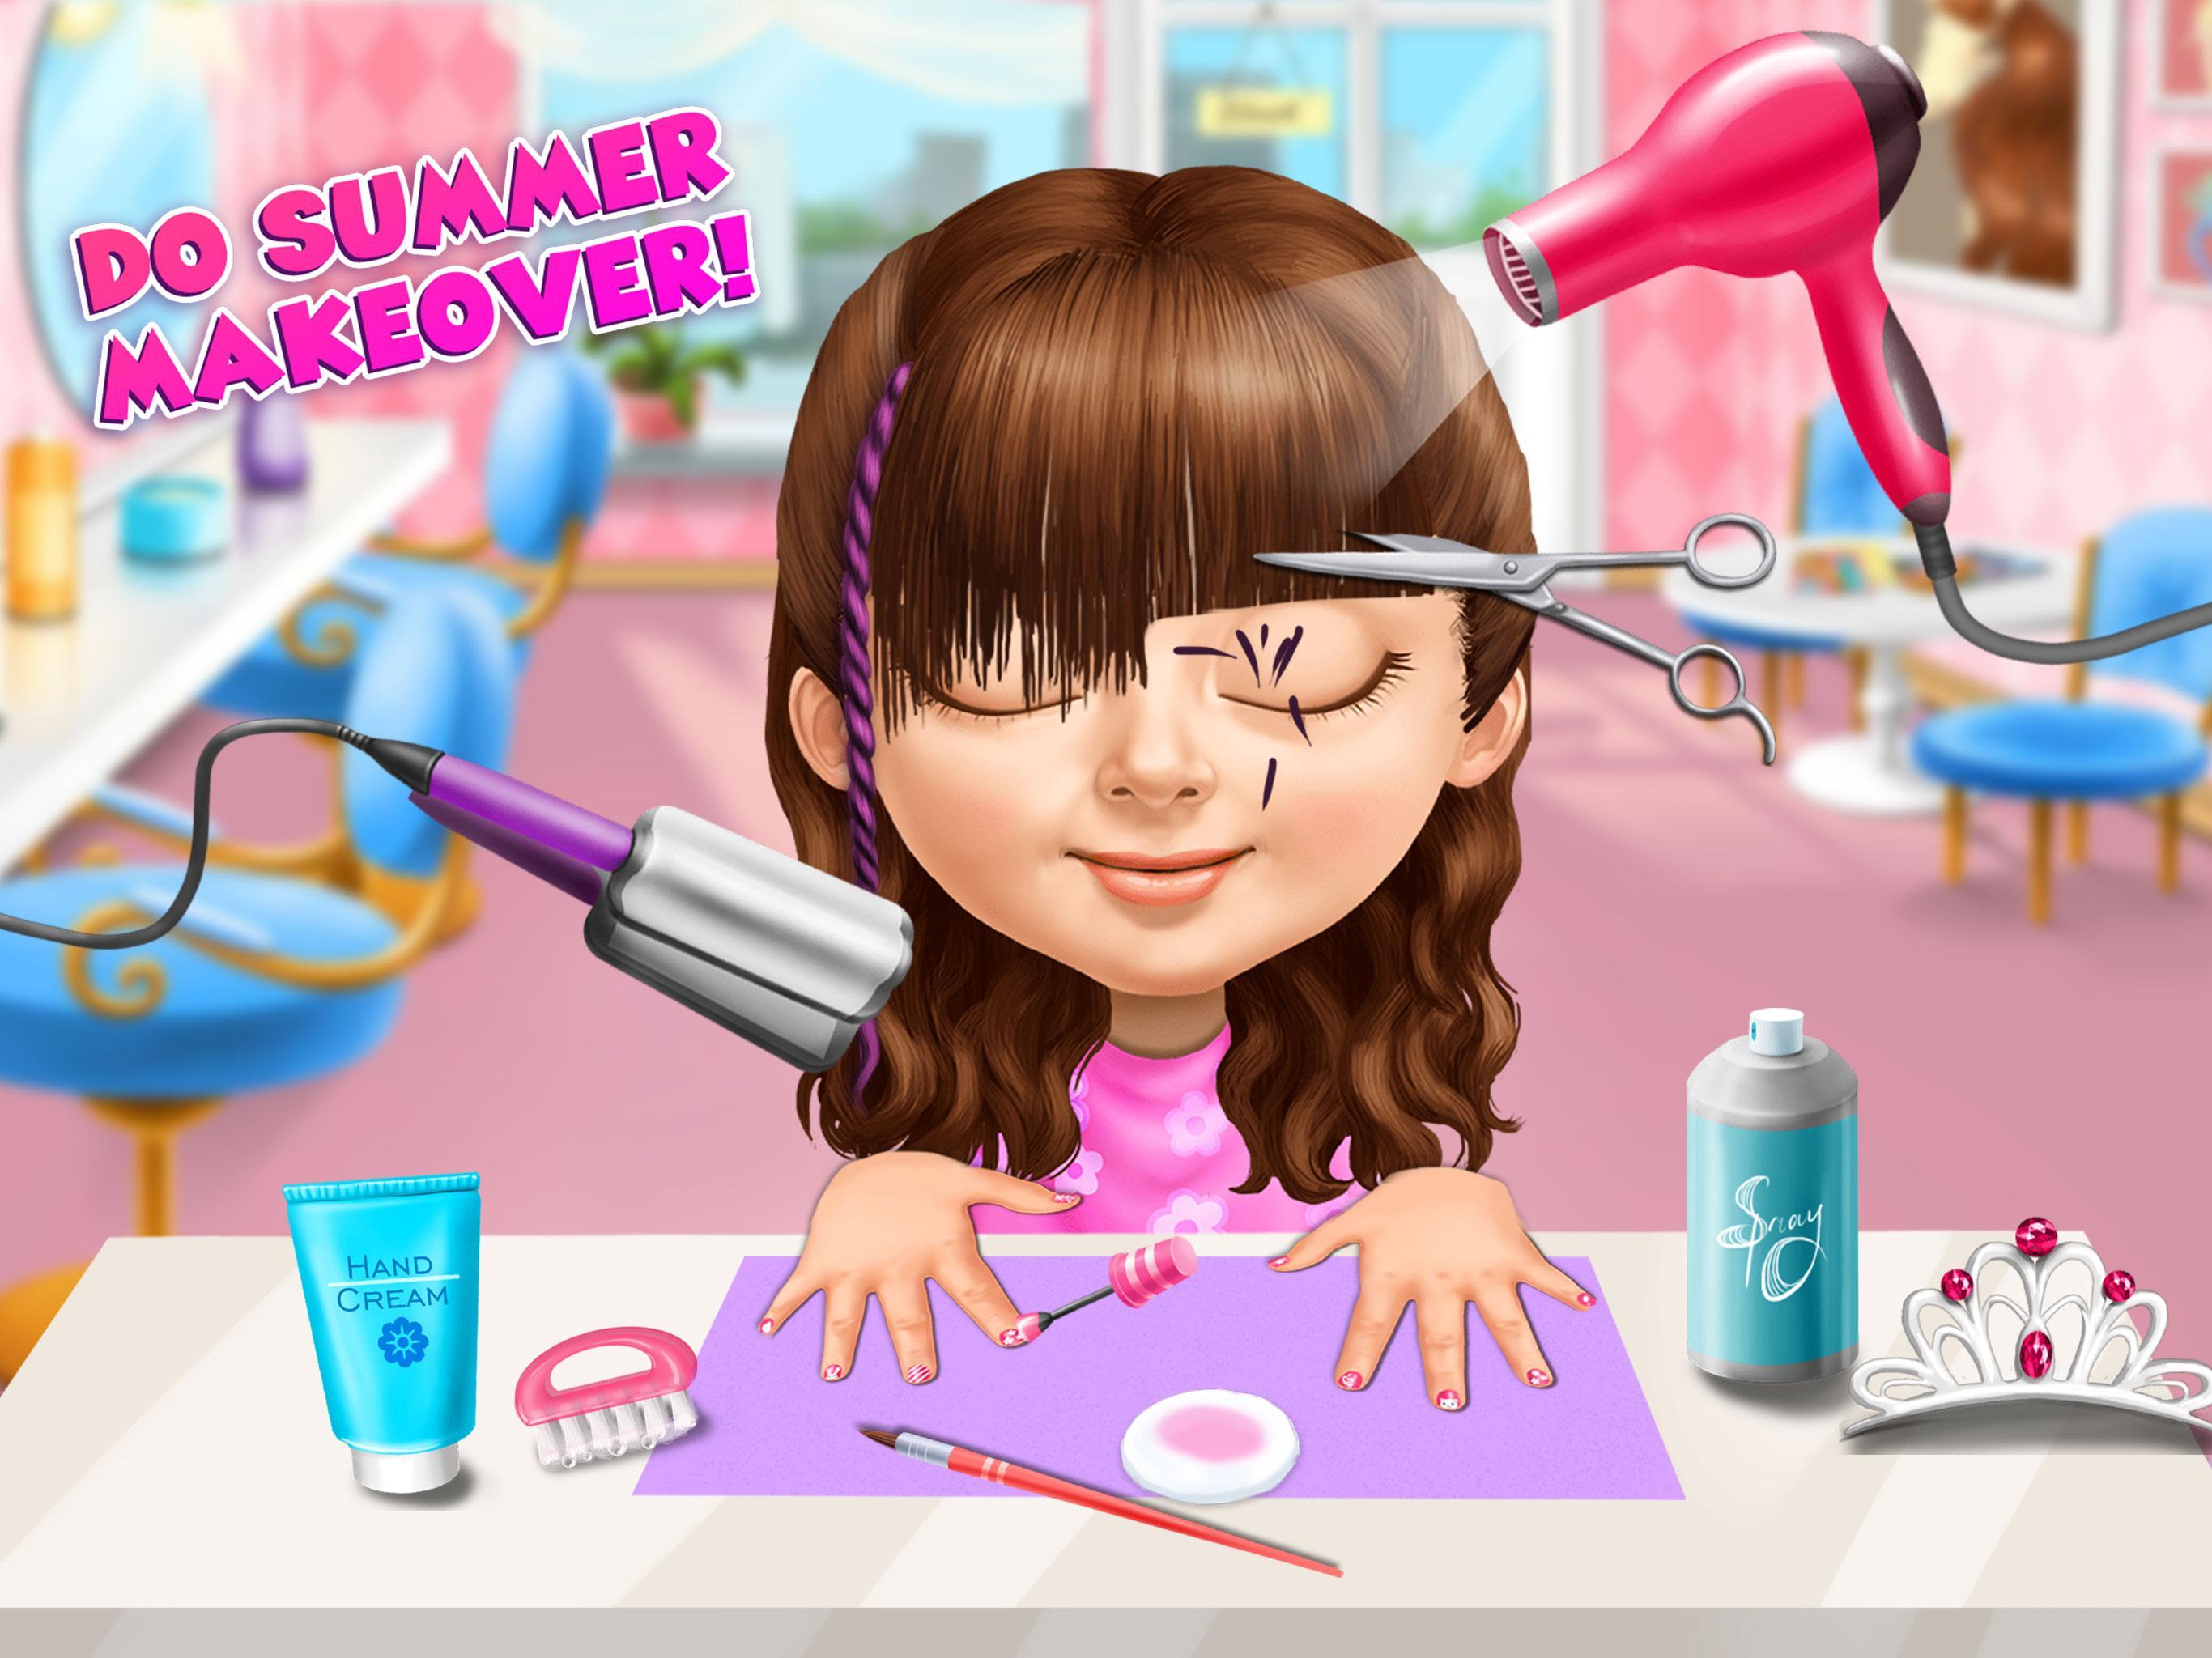 Sweet Baby Girl Summer Fun 2 - Sunny Makeover Game 7.0.1511 Screenshot 13